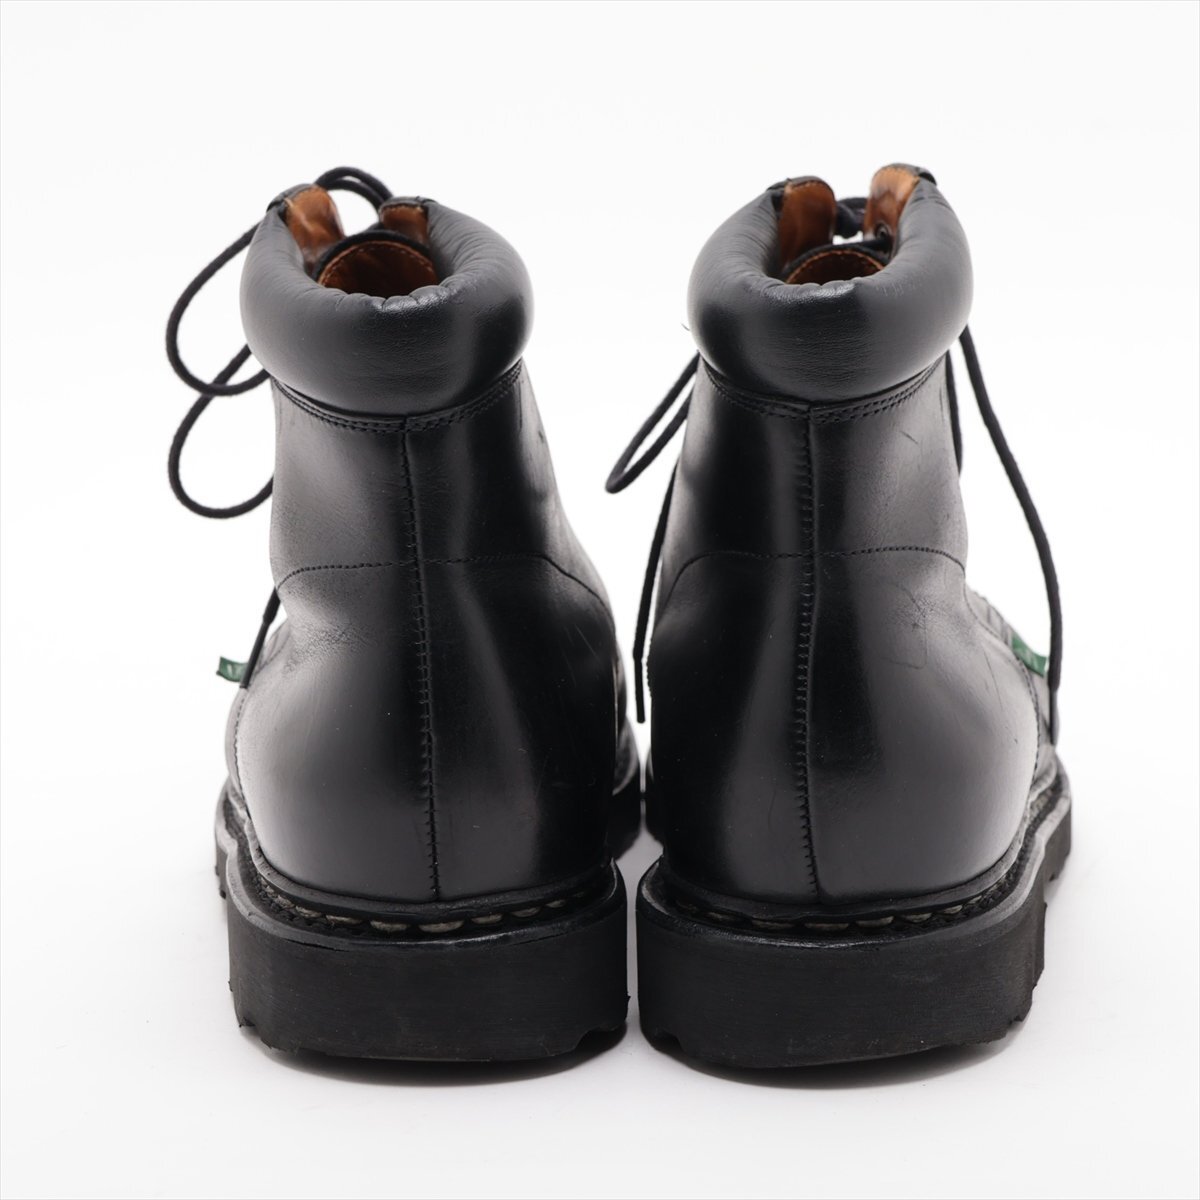 1 jpy # beautiful goods #PARABOOT Paraboot # leather race up short boots 6.5 82514 black black original leather shoes men's brand EEM U43-9